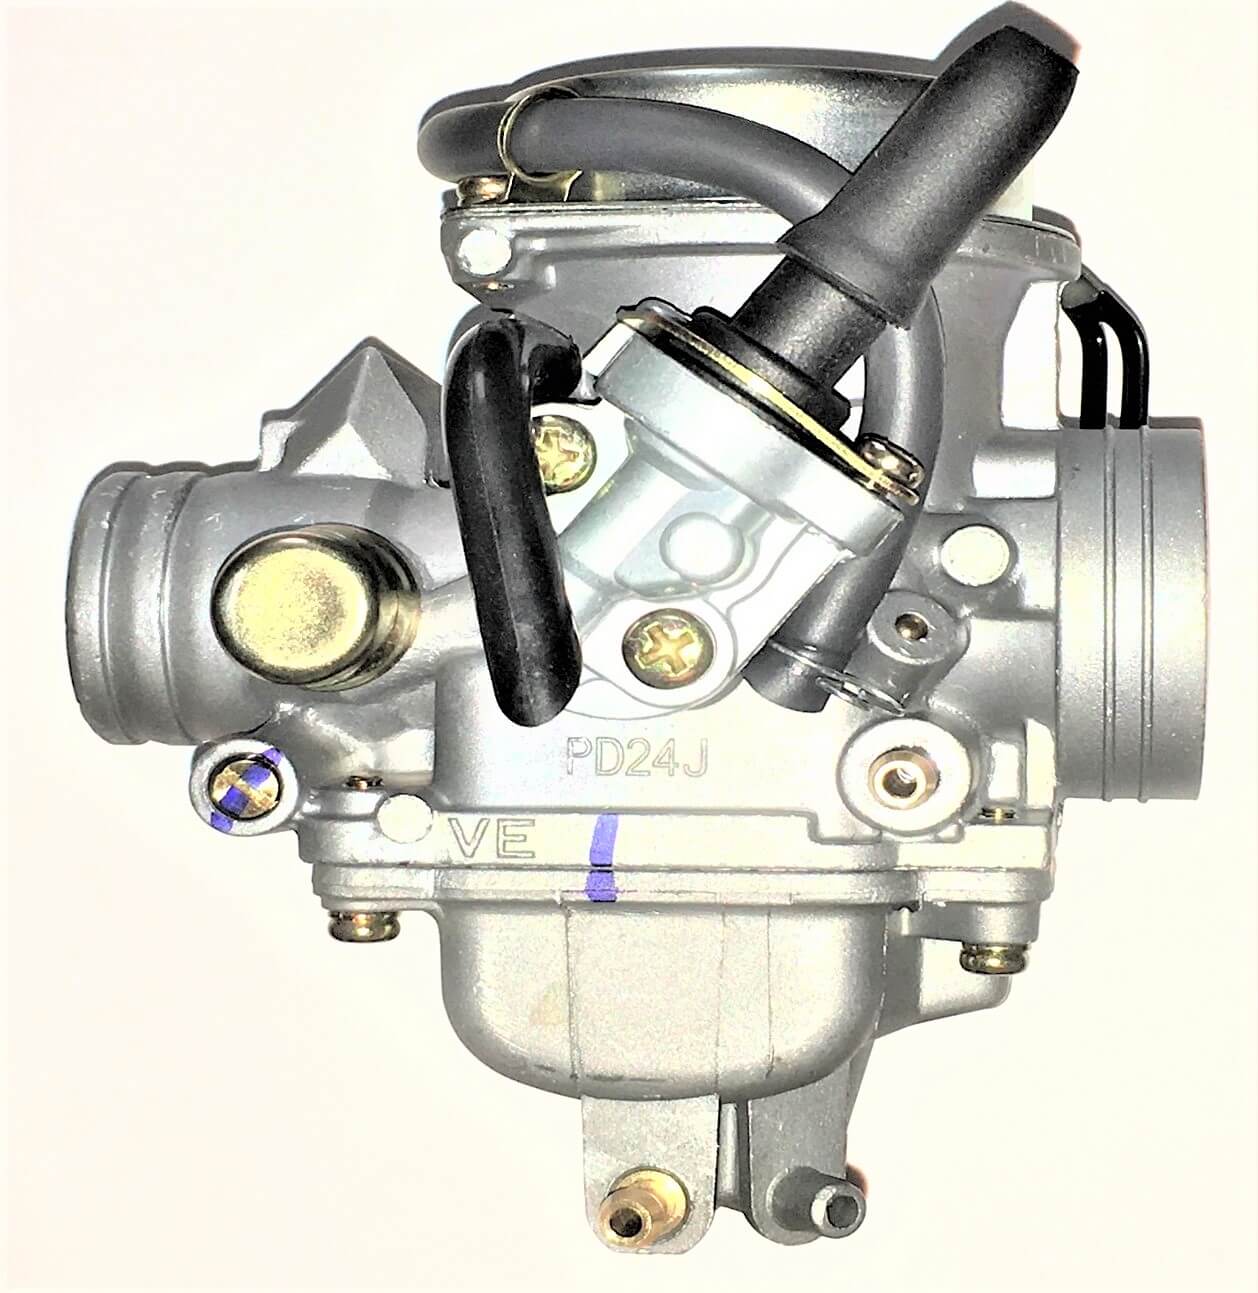 Kei Hin Style Carburetor Manual Choke 150-250cc Fits E-Ton Yukon YXL150, CXL150, Viper RXL150R ATVs & Beamer R4-150, Matrix 150 Scooters + Others Intake OD=32mm, Air Box OD=42mm